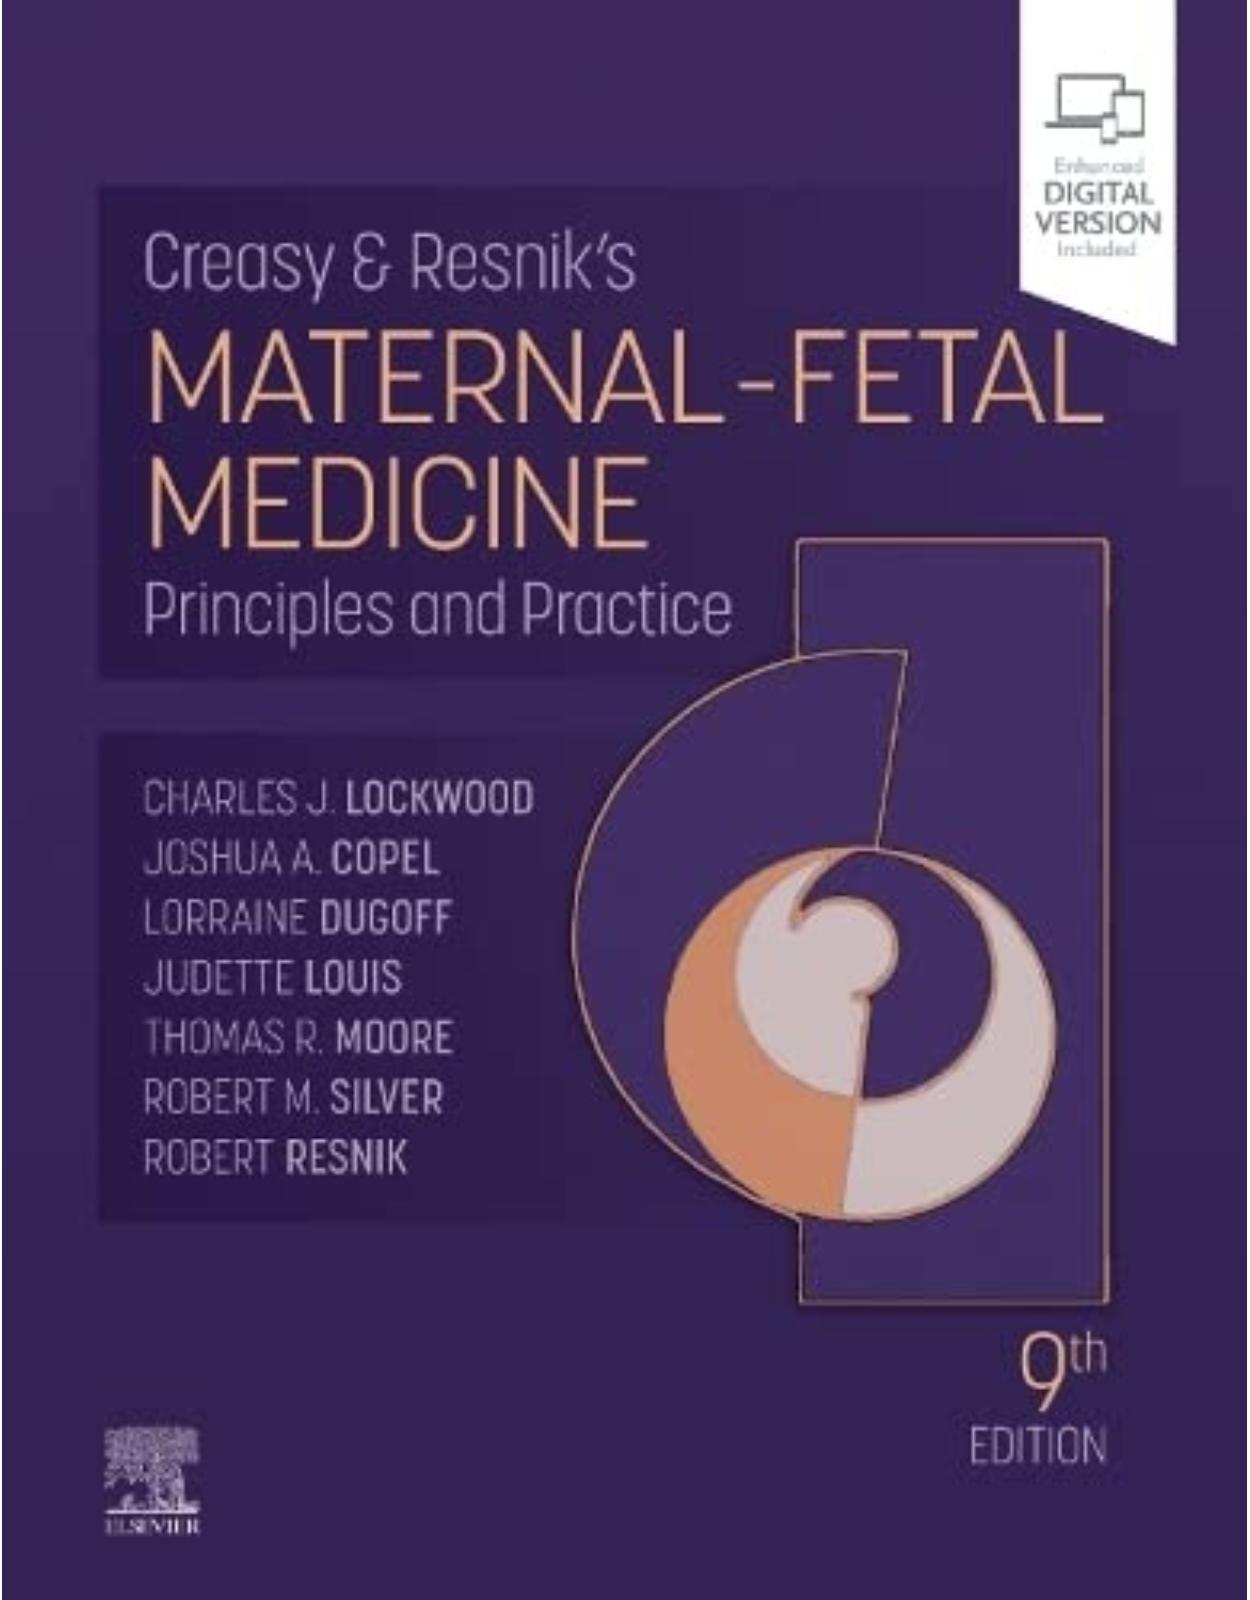 Creasy and Resnik’s Maternal-Fetal Medicine